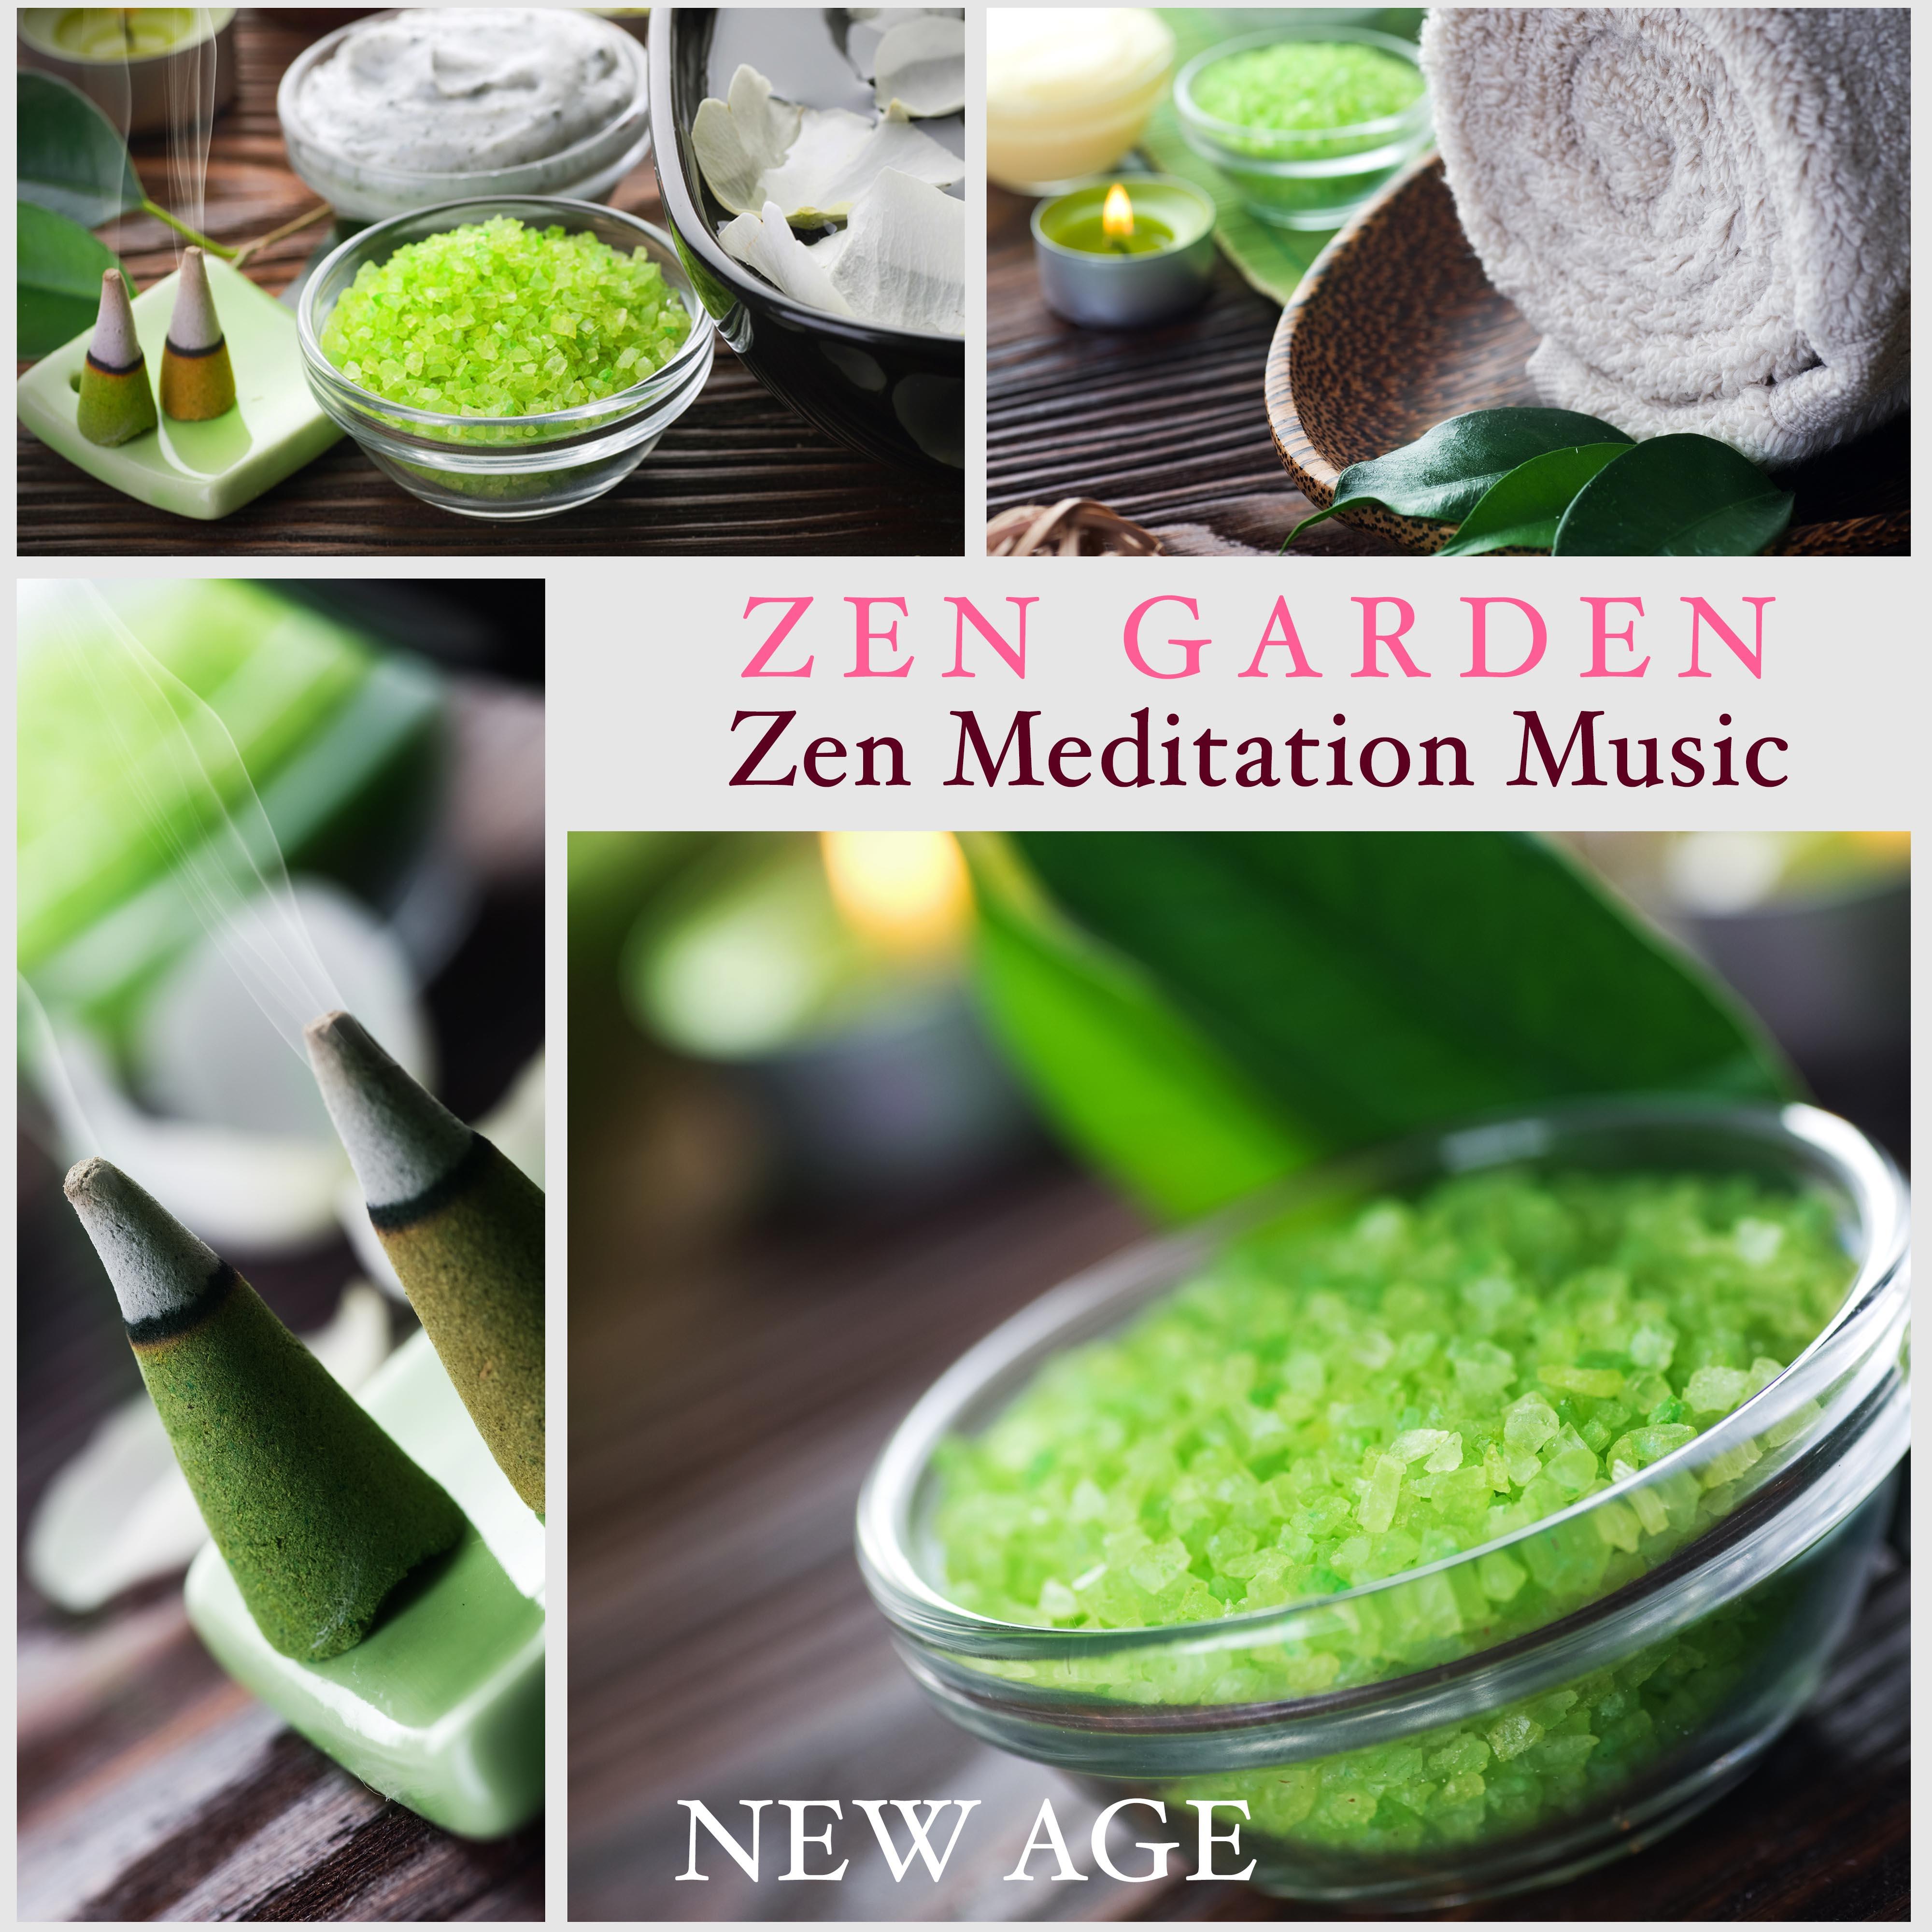 Zen Garden - Zen Meditation Music